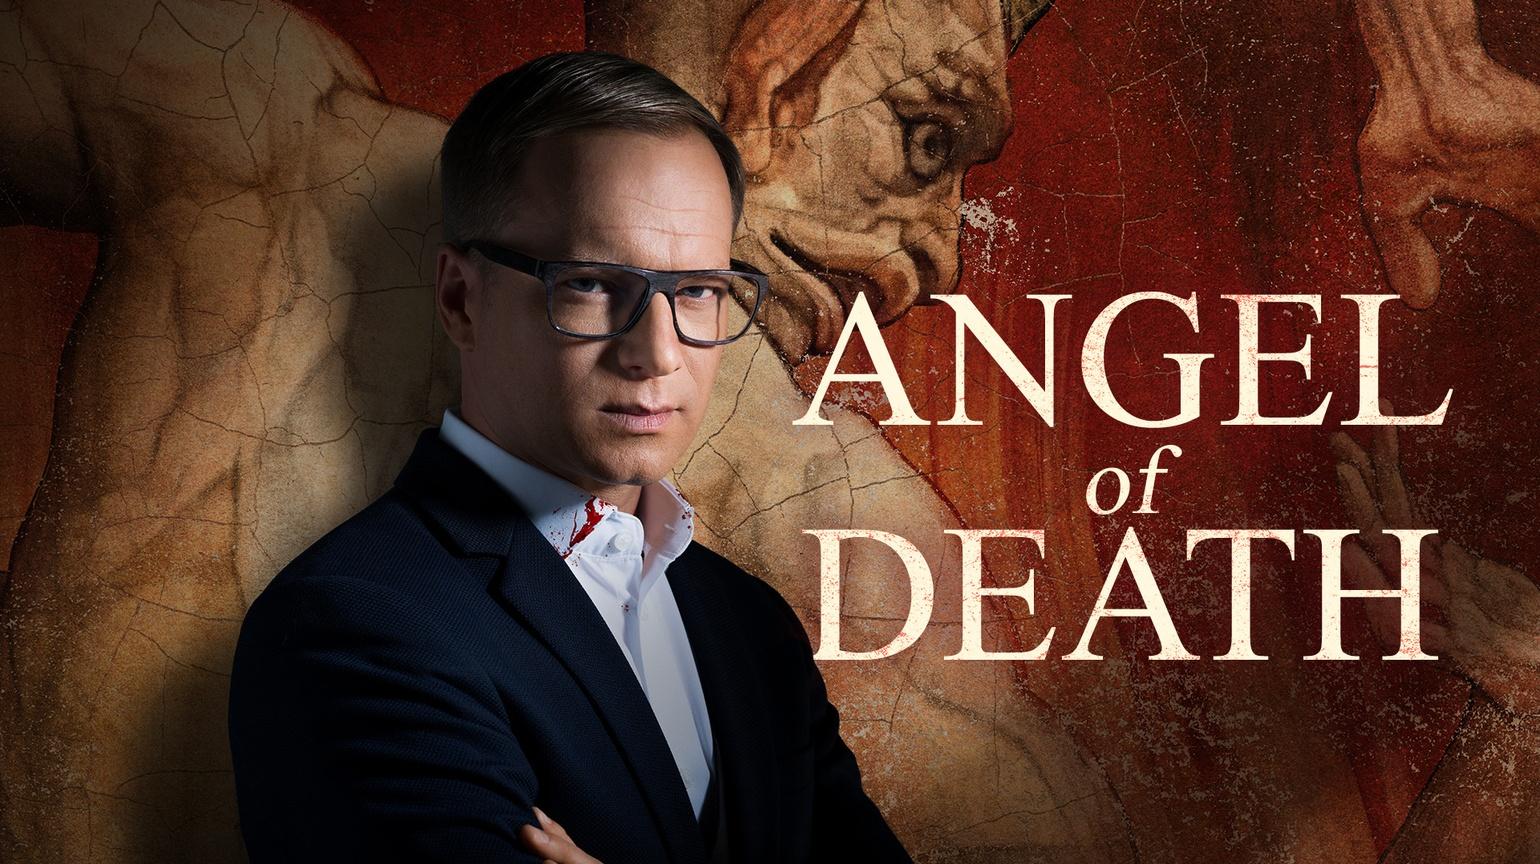 Watch Angels of Death season 1 episode 5 streaming online